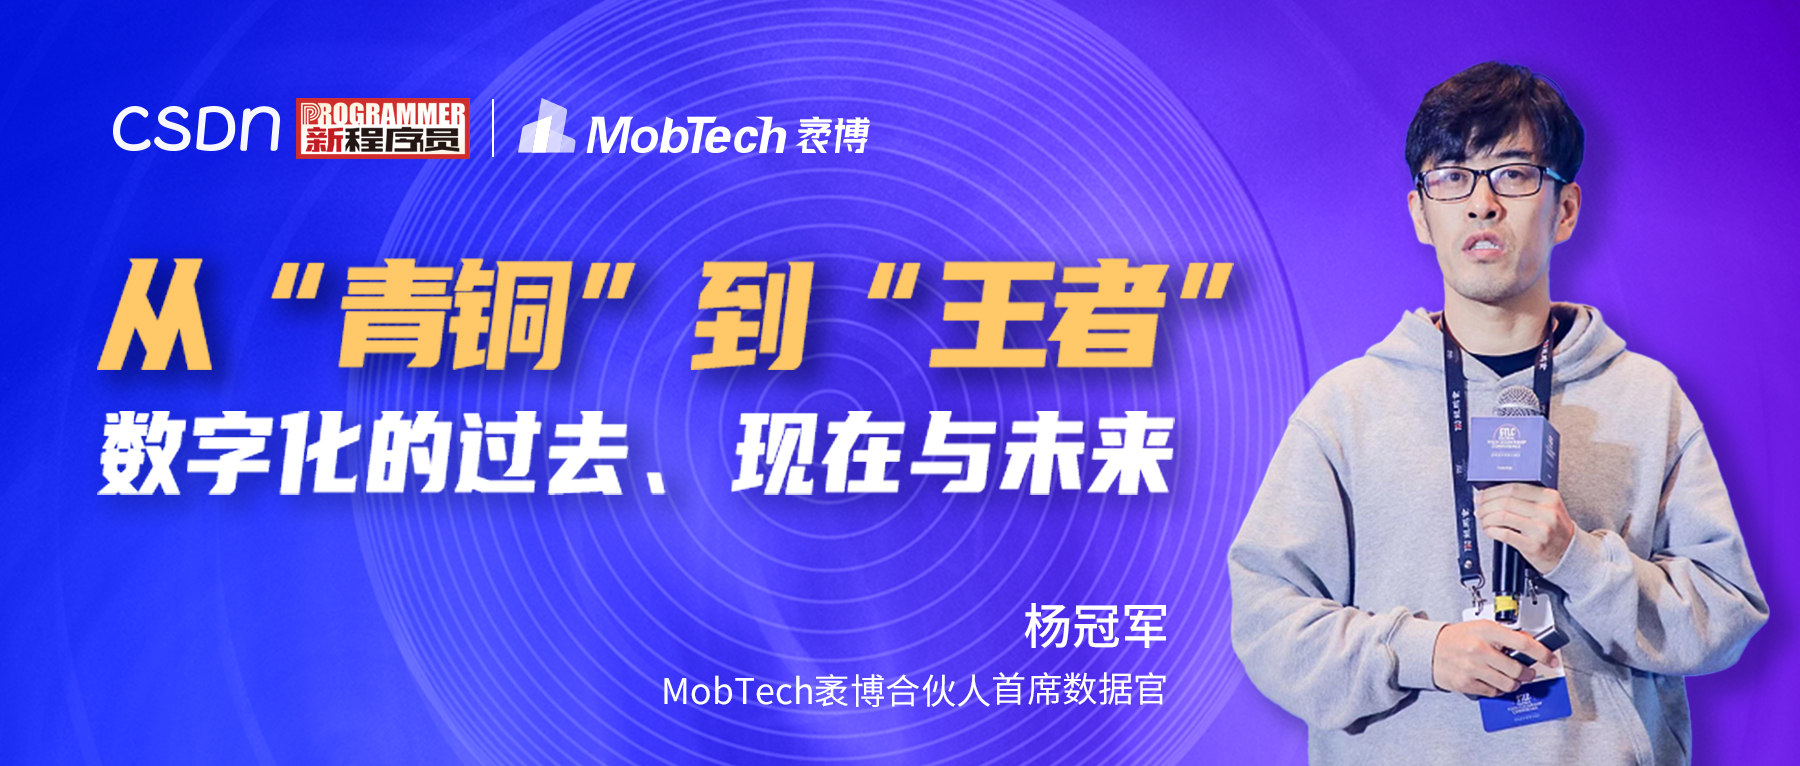 MobTech袤博科技杨冠军受CSDN之邀探索企业数字化转型